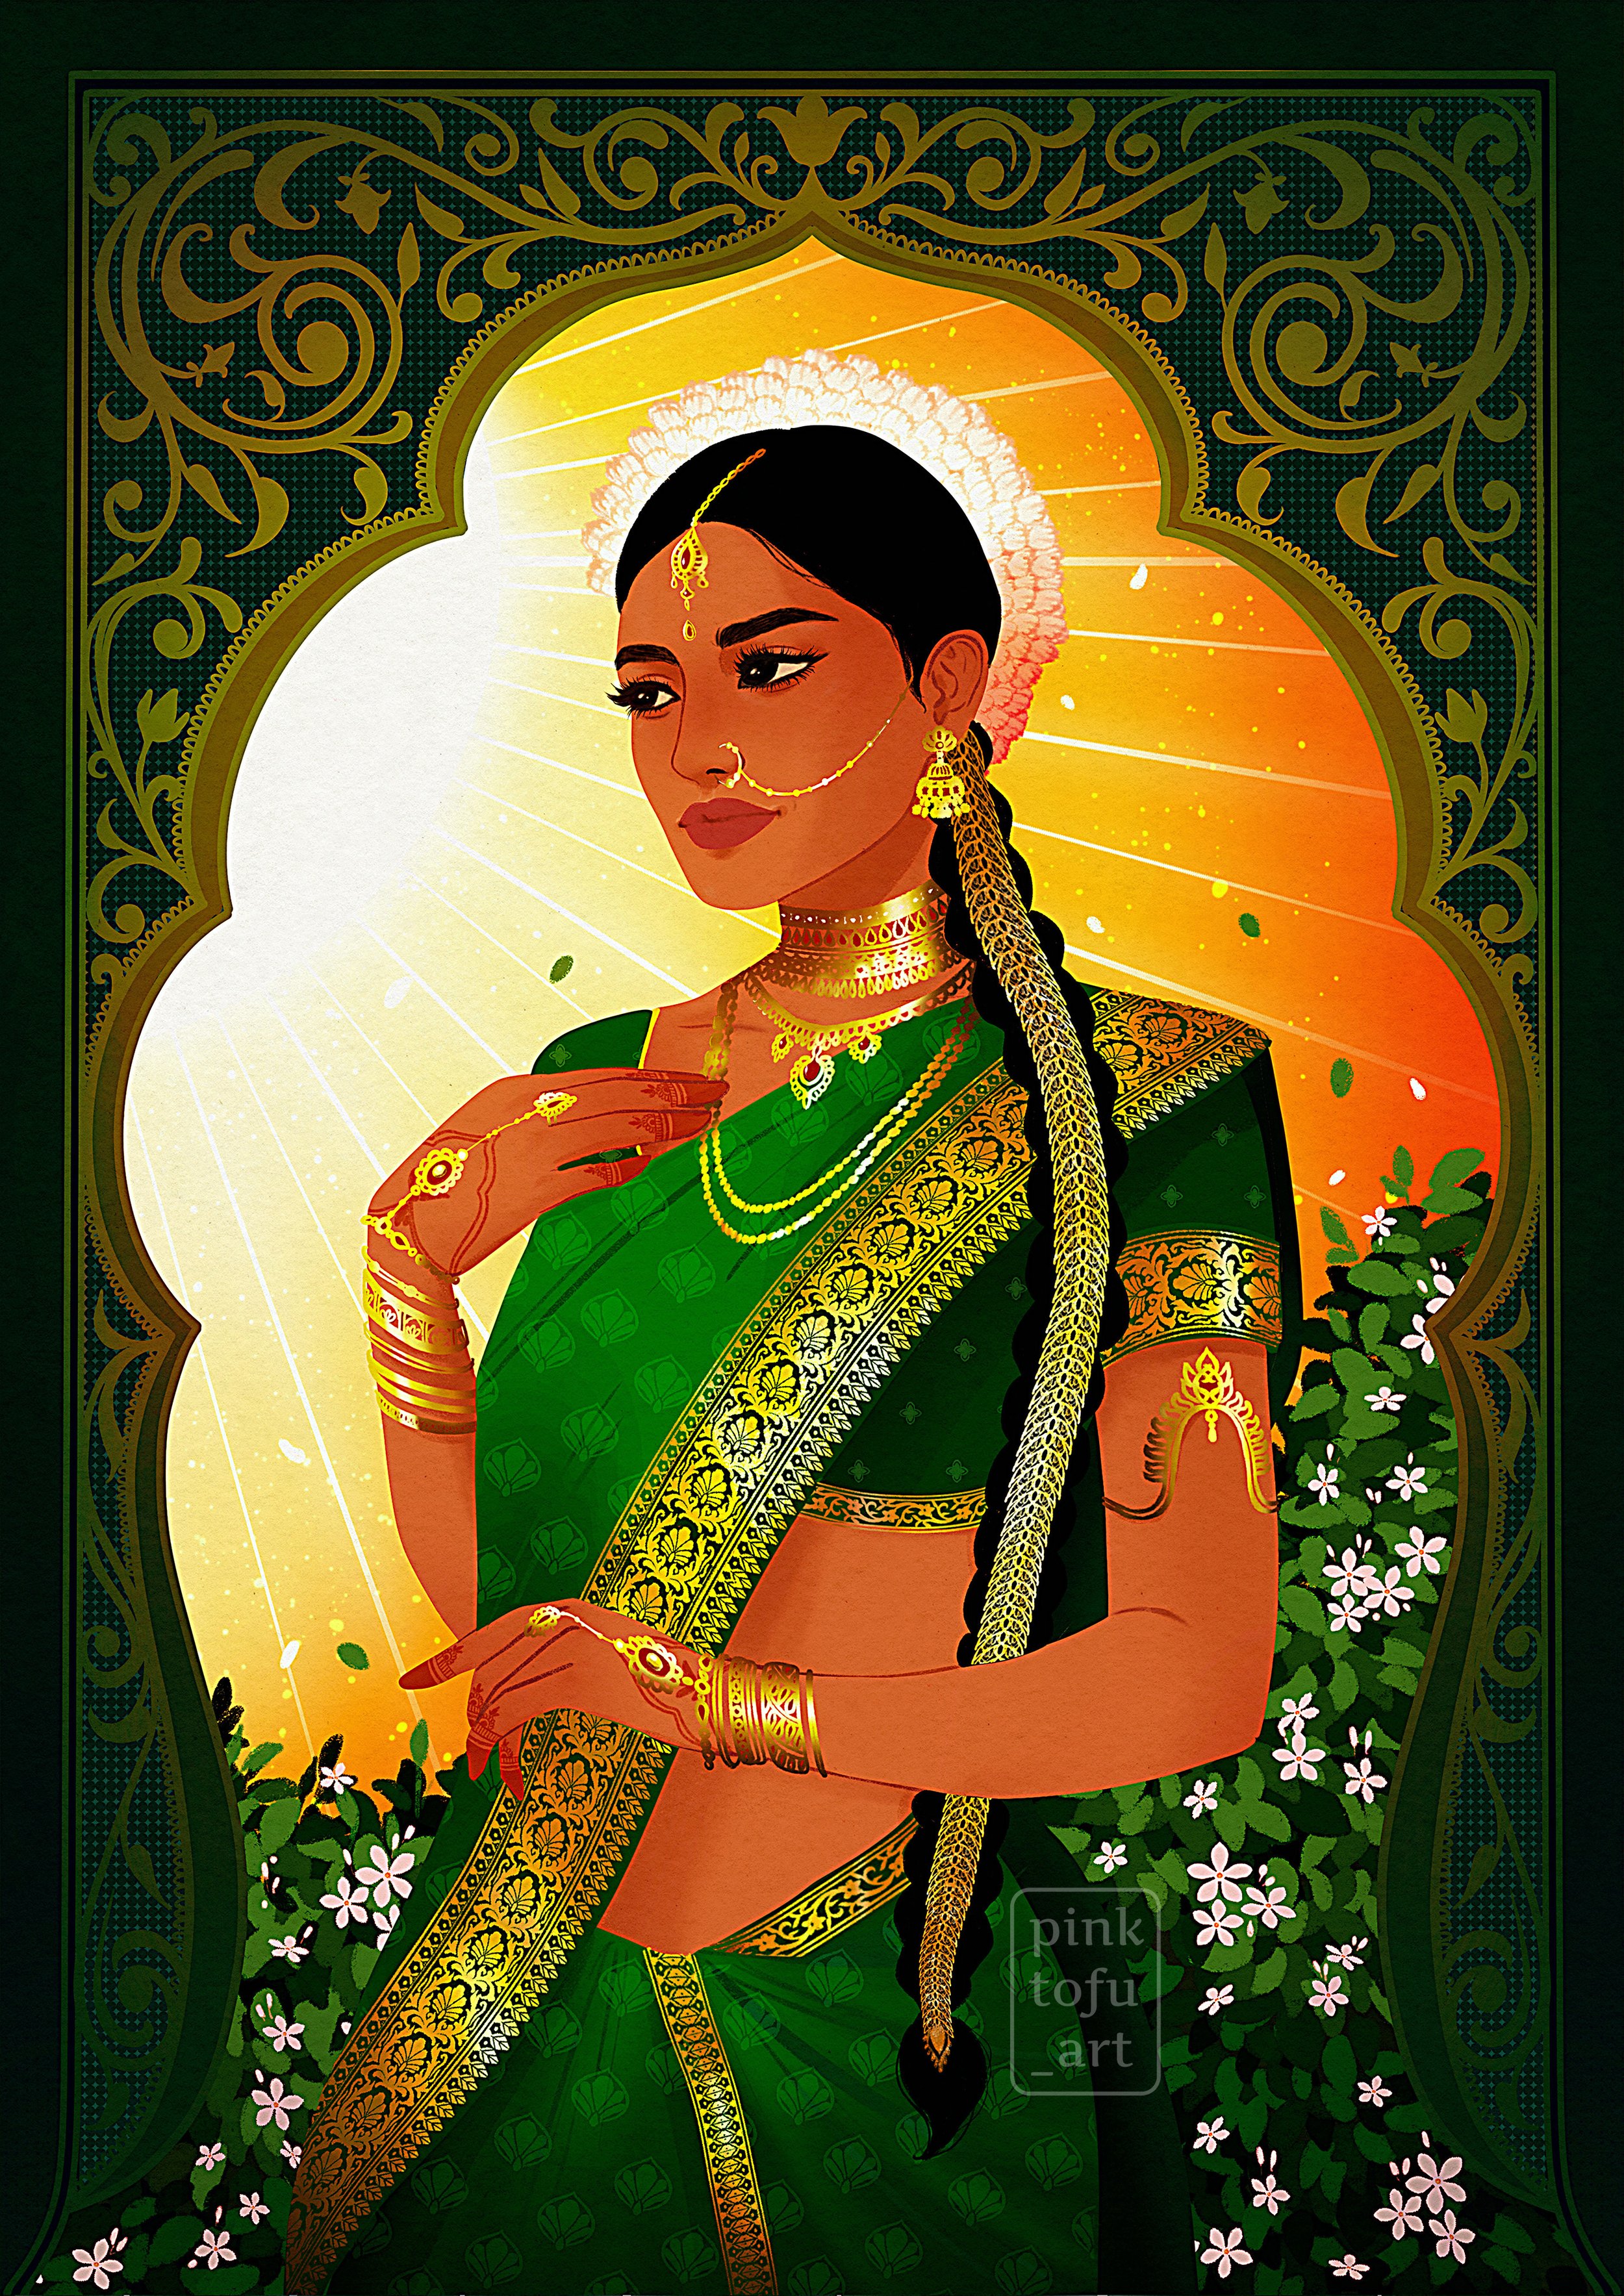 Character card made for Author Tasha Suri and her novel "The Jasmine Throne"